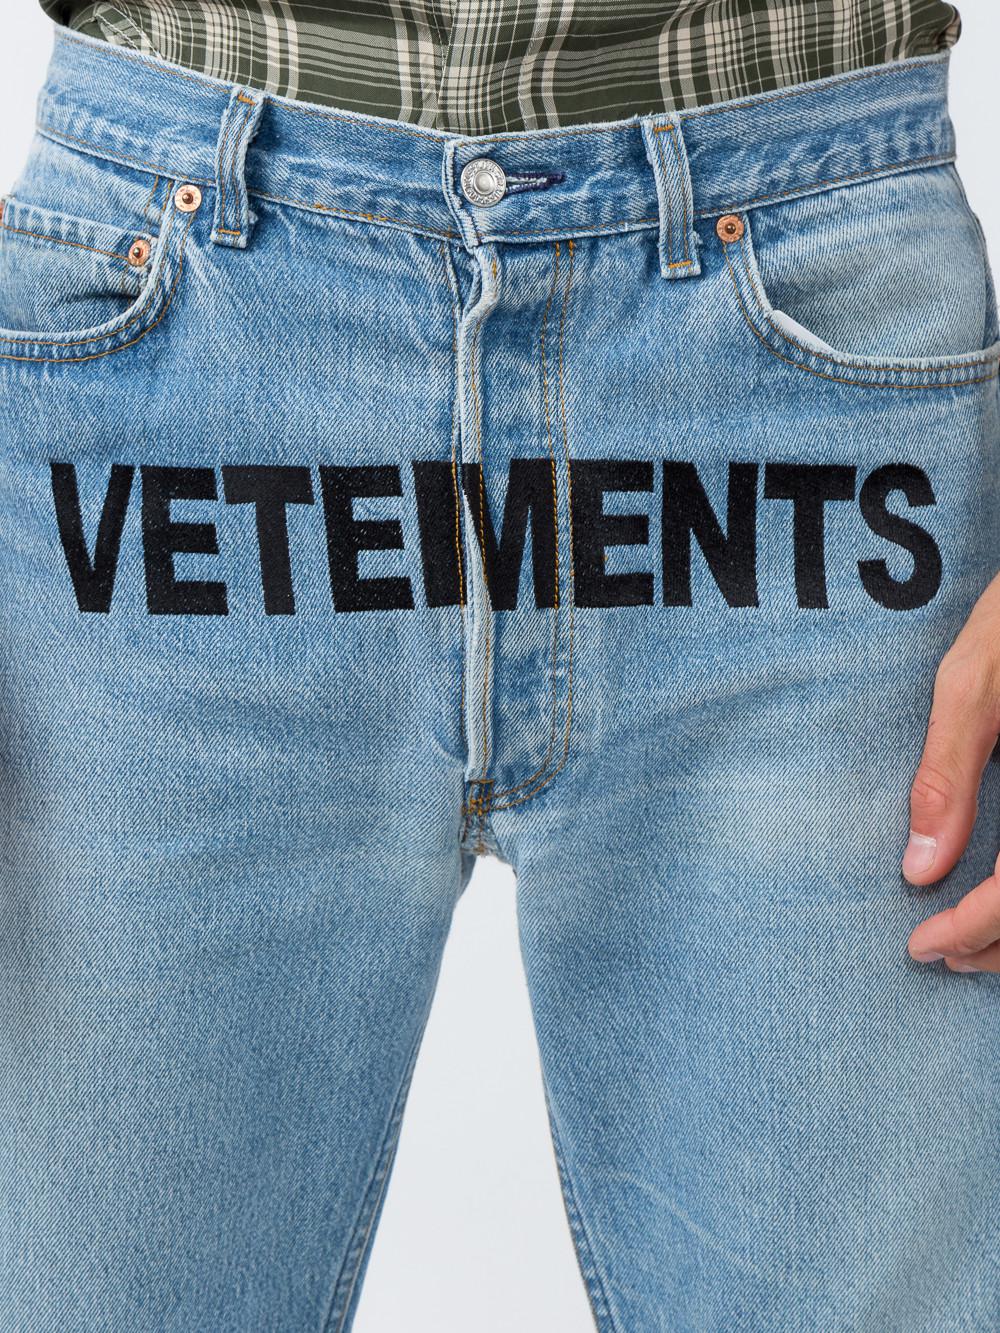 Vetements Denim X Levis Logo Jeans In Blue For Men Lyst